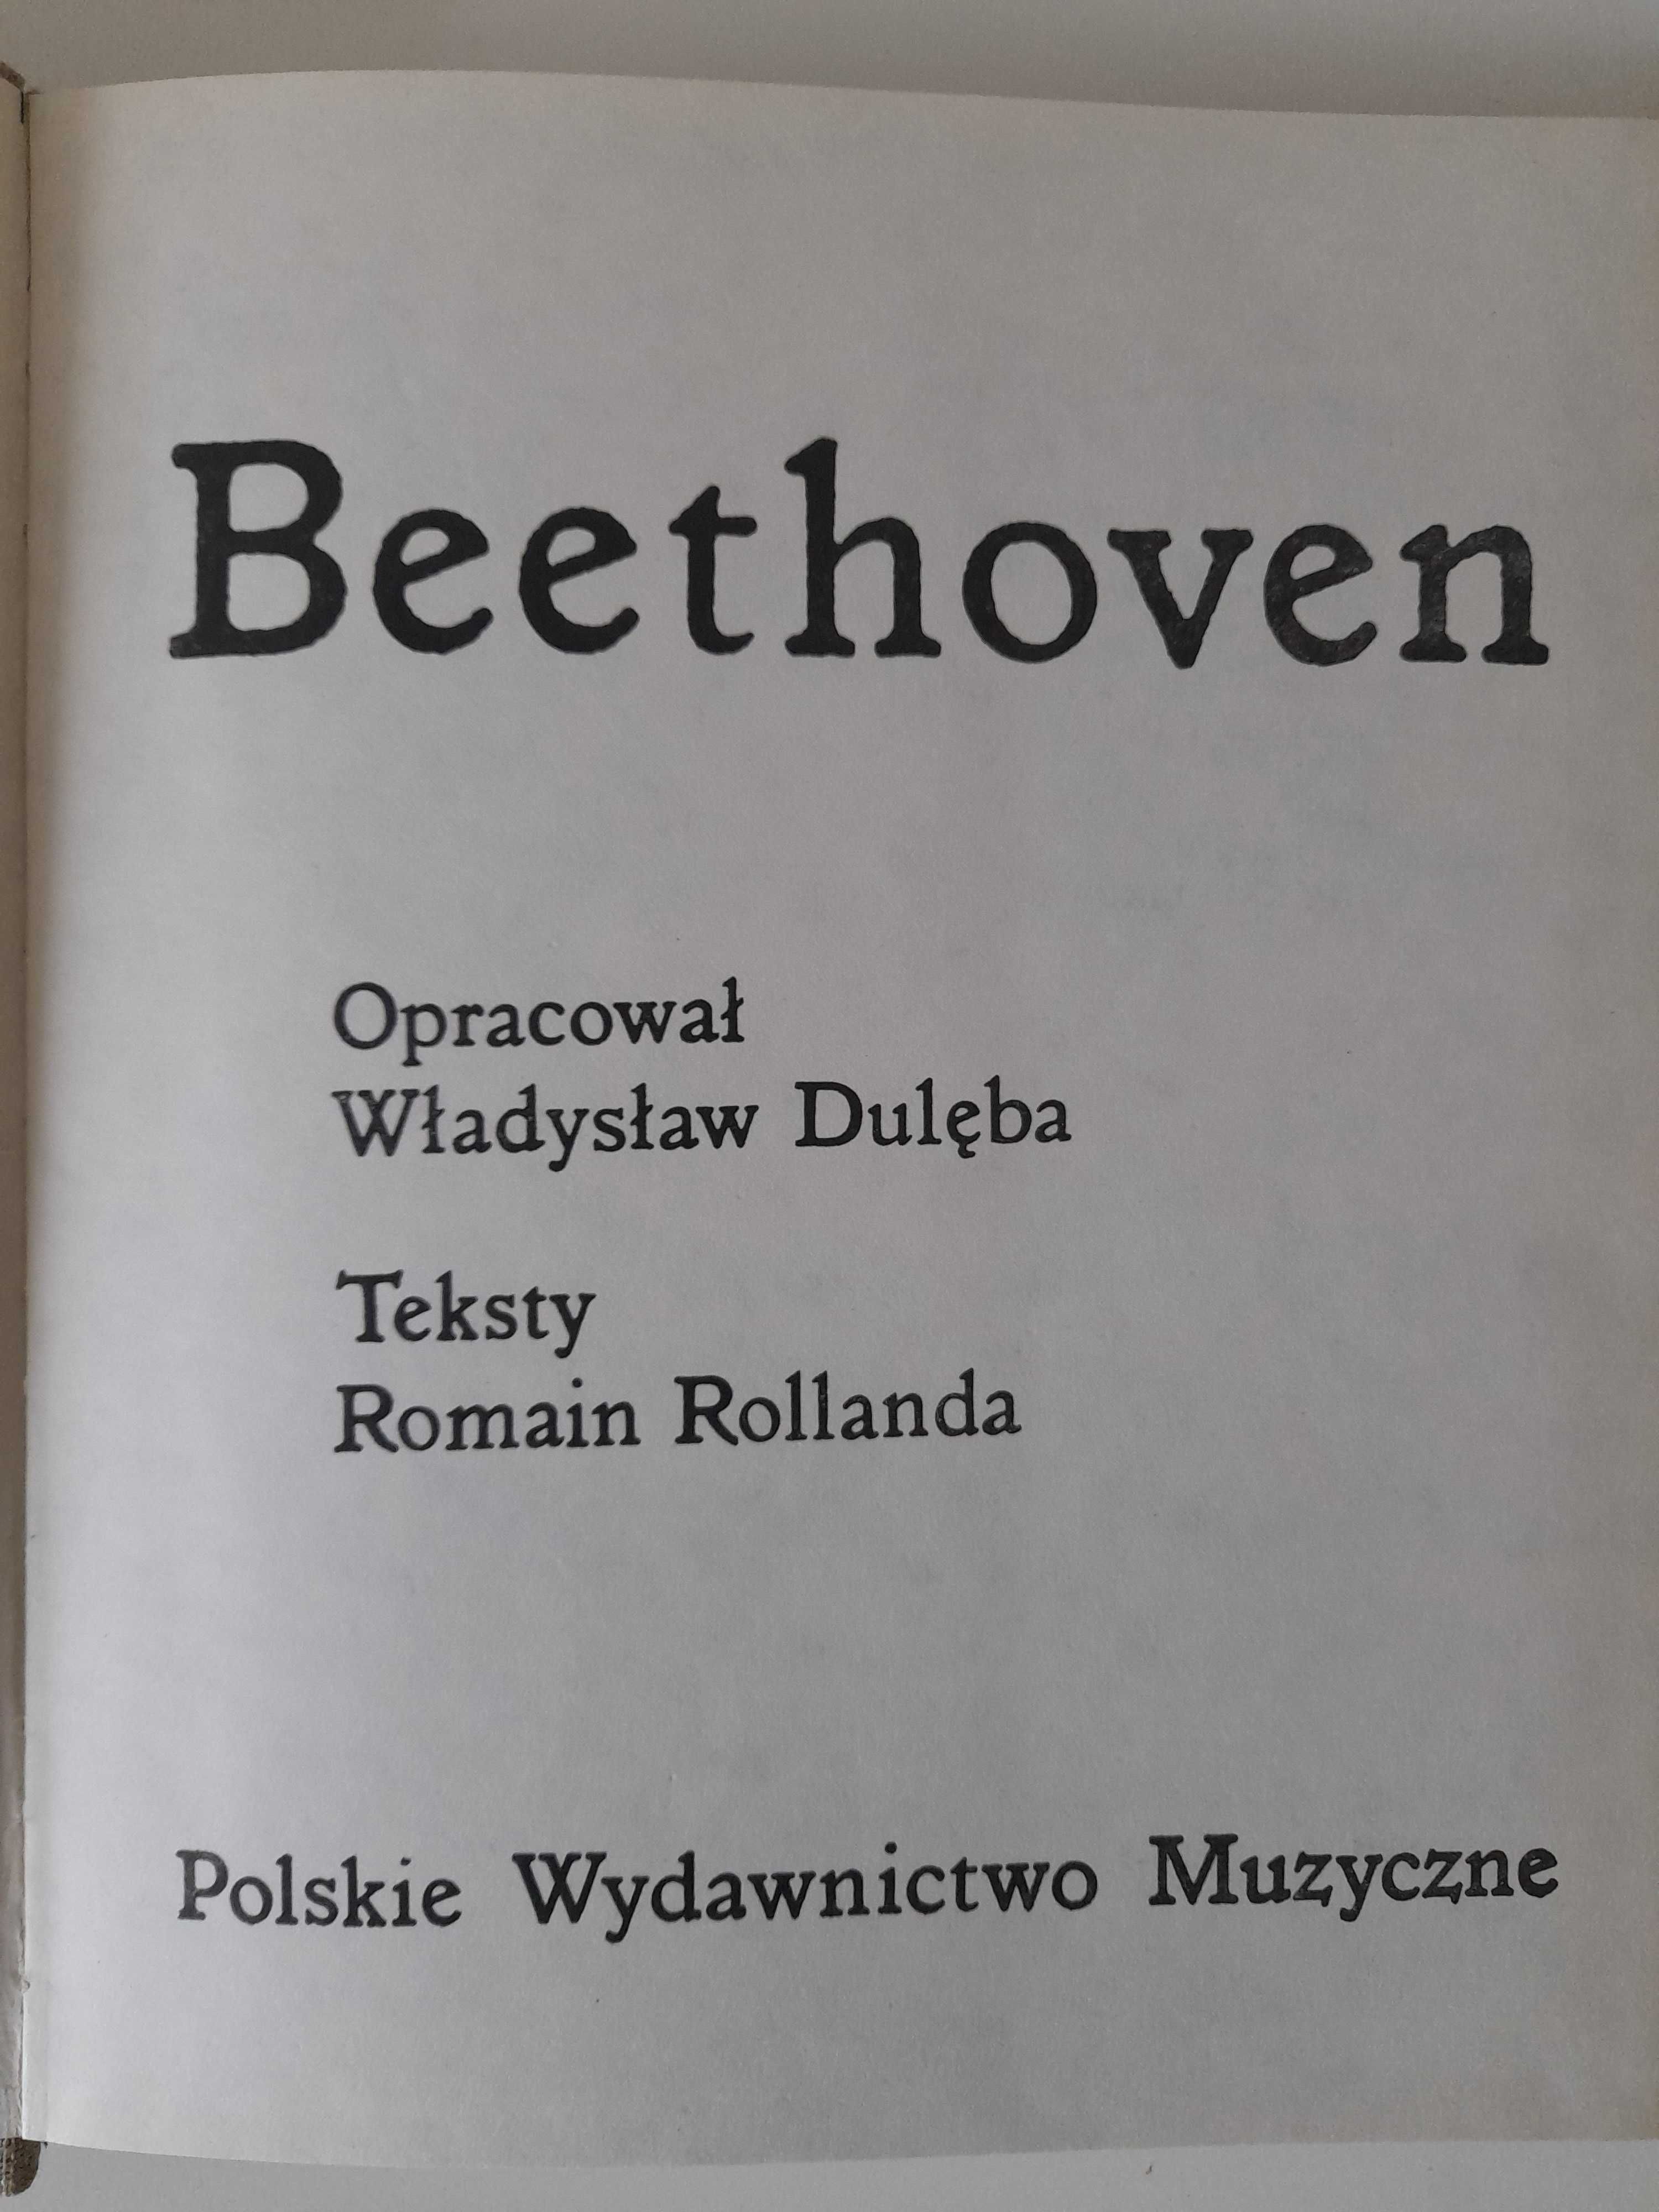 Beethoven Władysław Dulęba, Romain Rolland